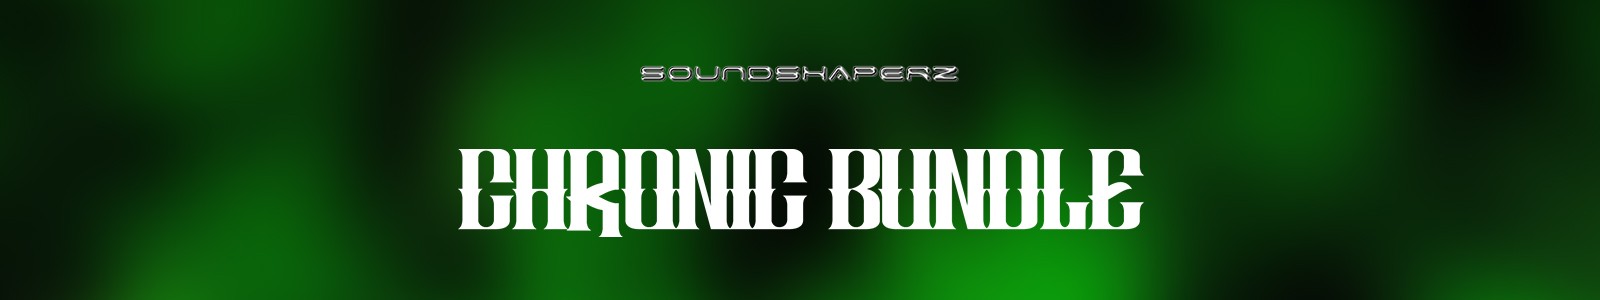 Tha Chronic Bundle by Soundshaperz